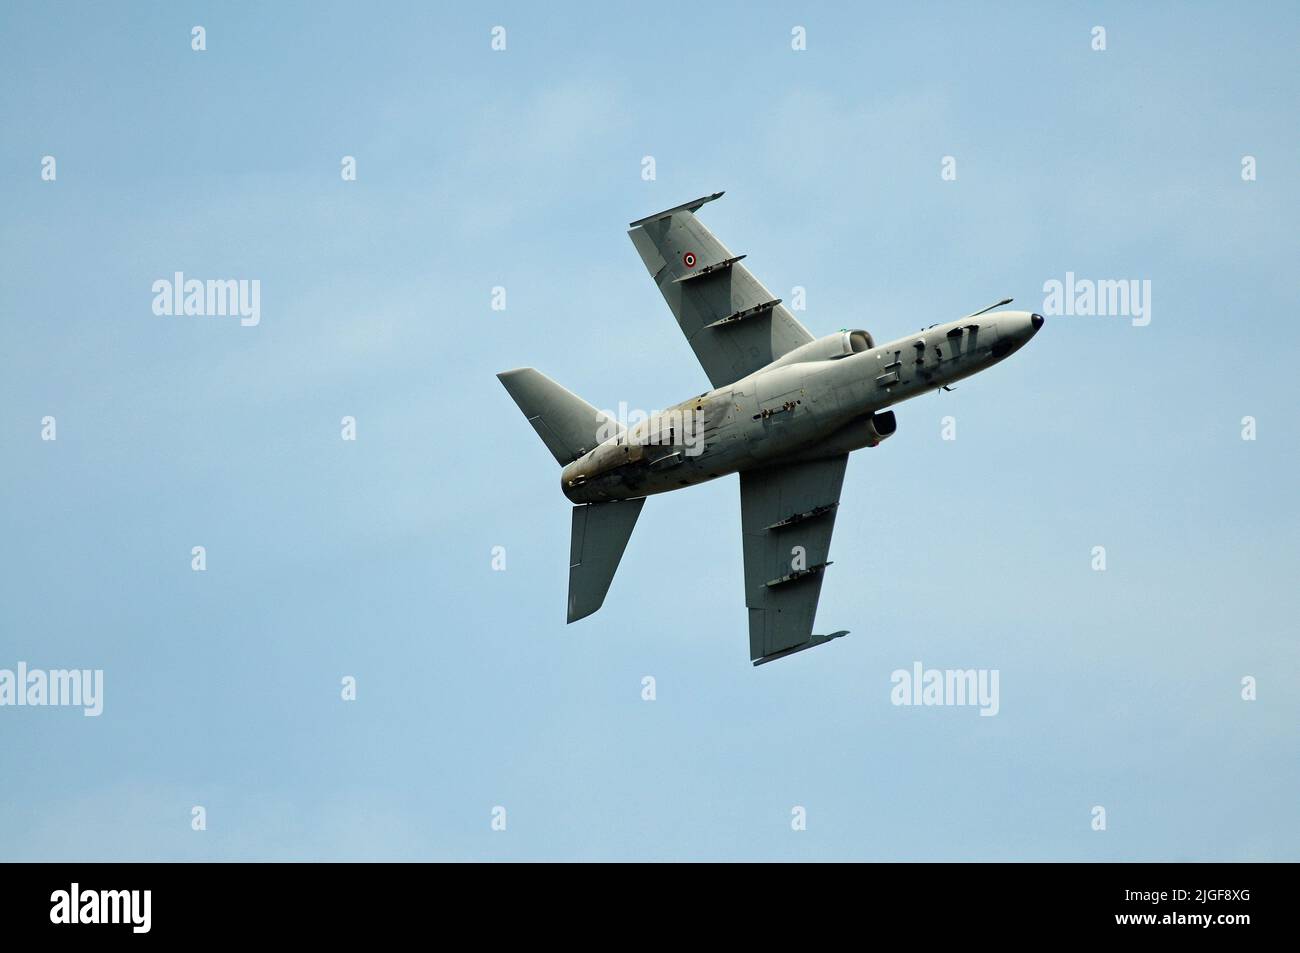 Italian Air Force A-11. Stock Photo